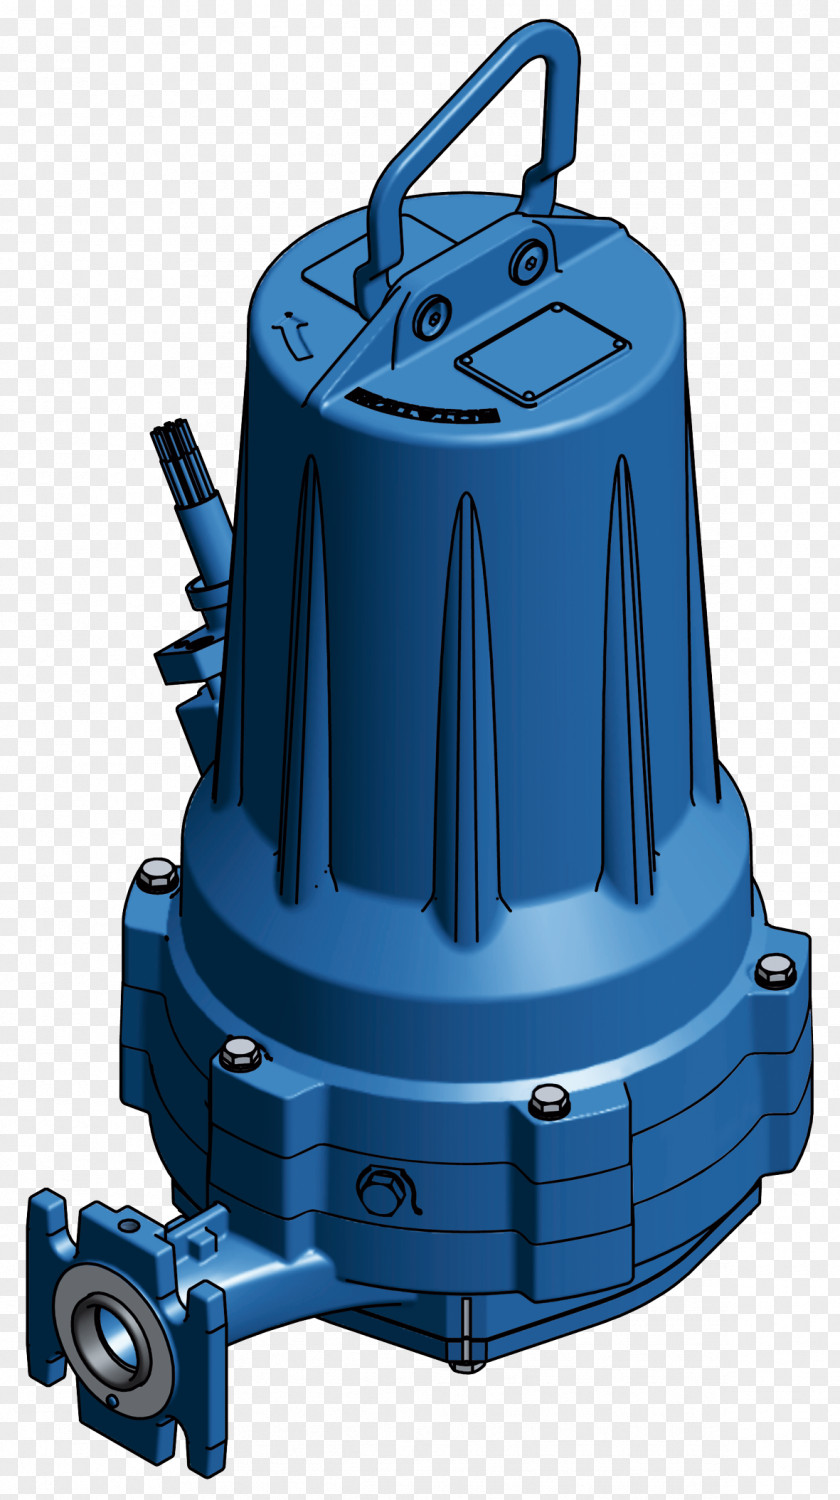 Turbine Submersible Pump Machine Manufacturing PNG